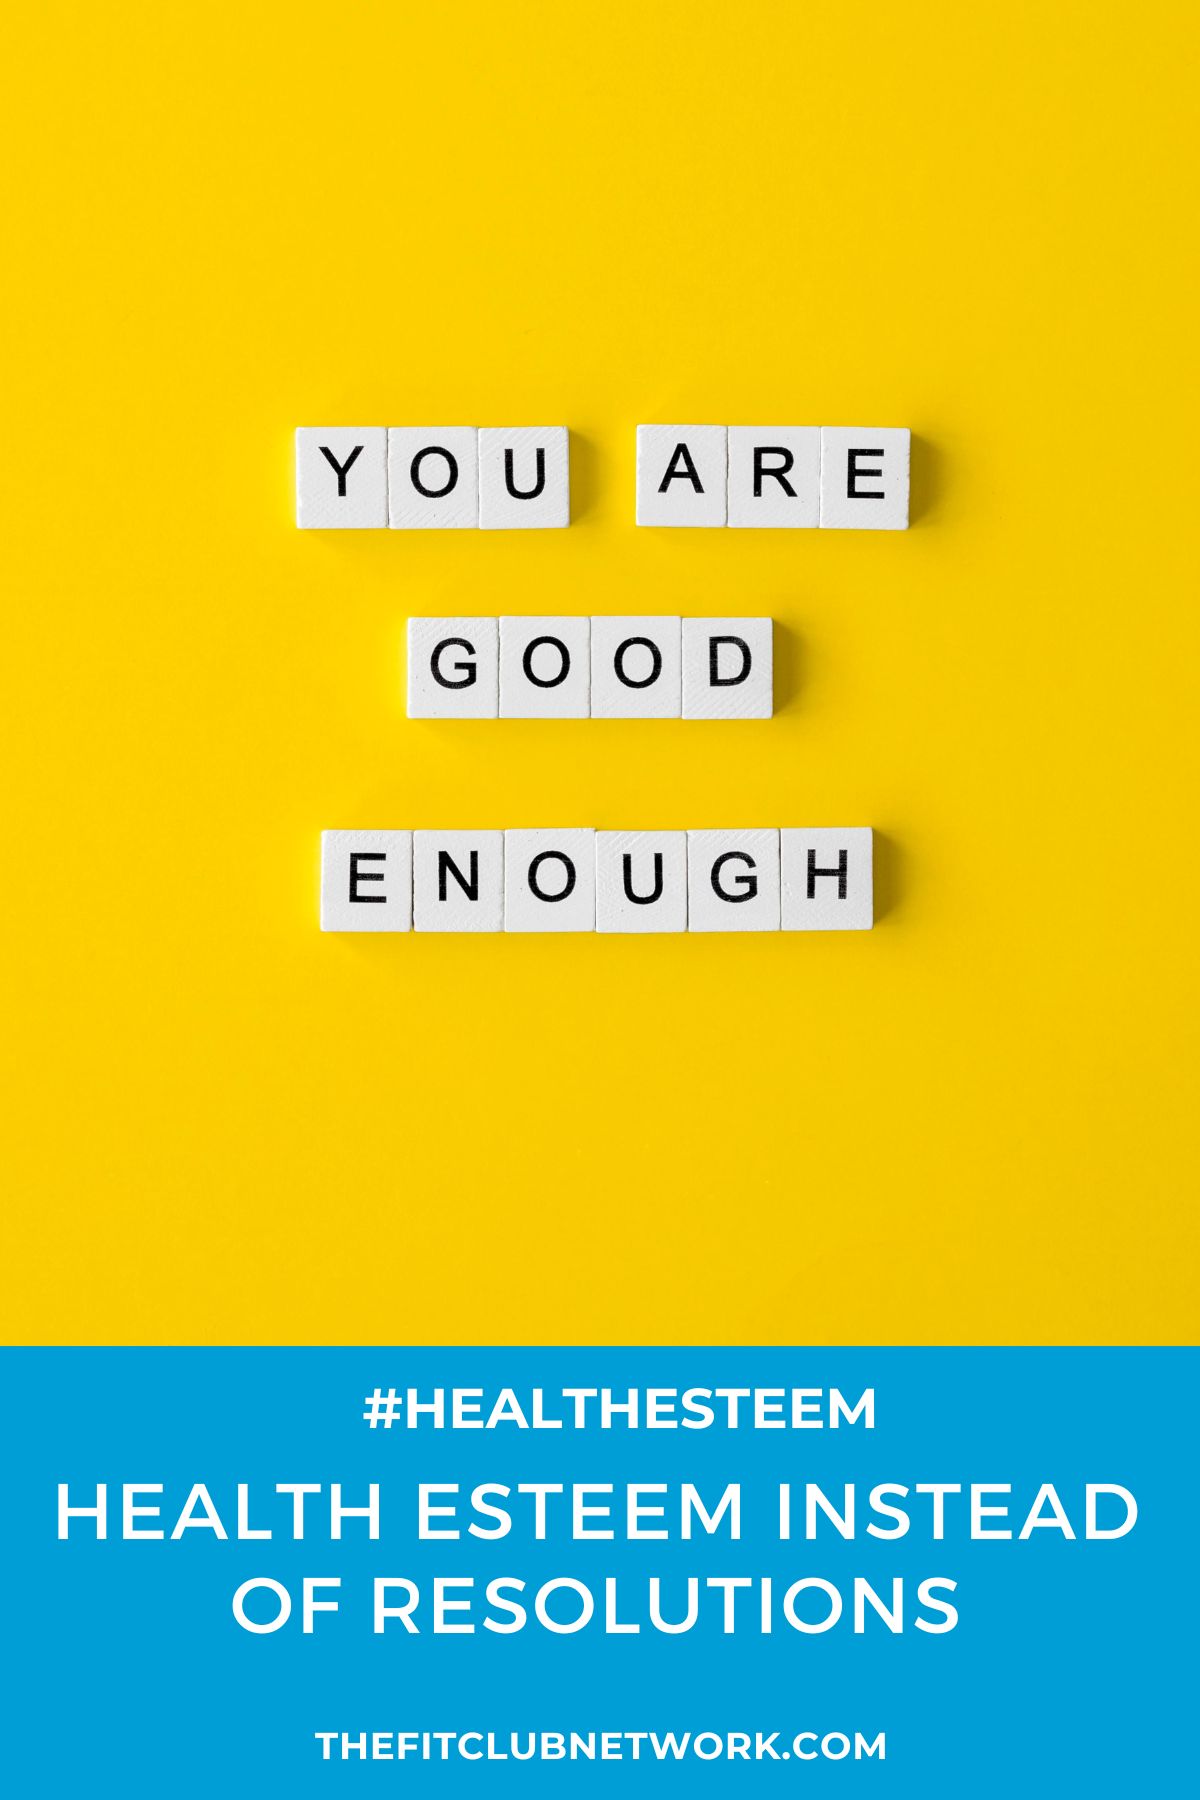 Health Esteem Instead of Resolutions